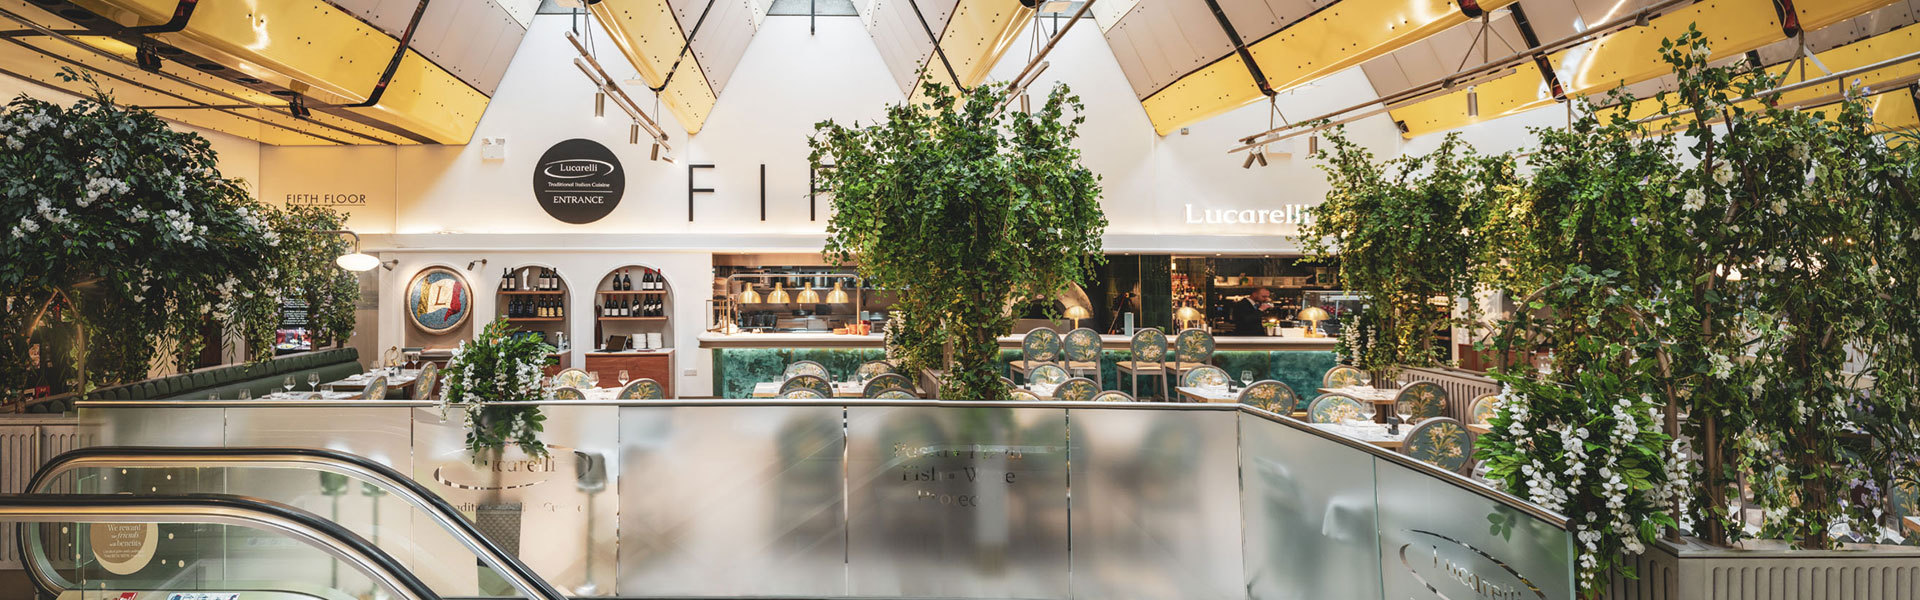 Lucarelli Restaurant - London Knightsbridge